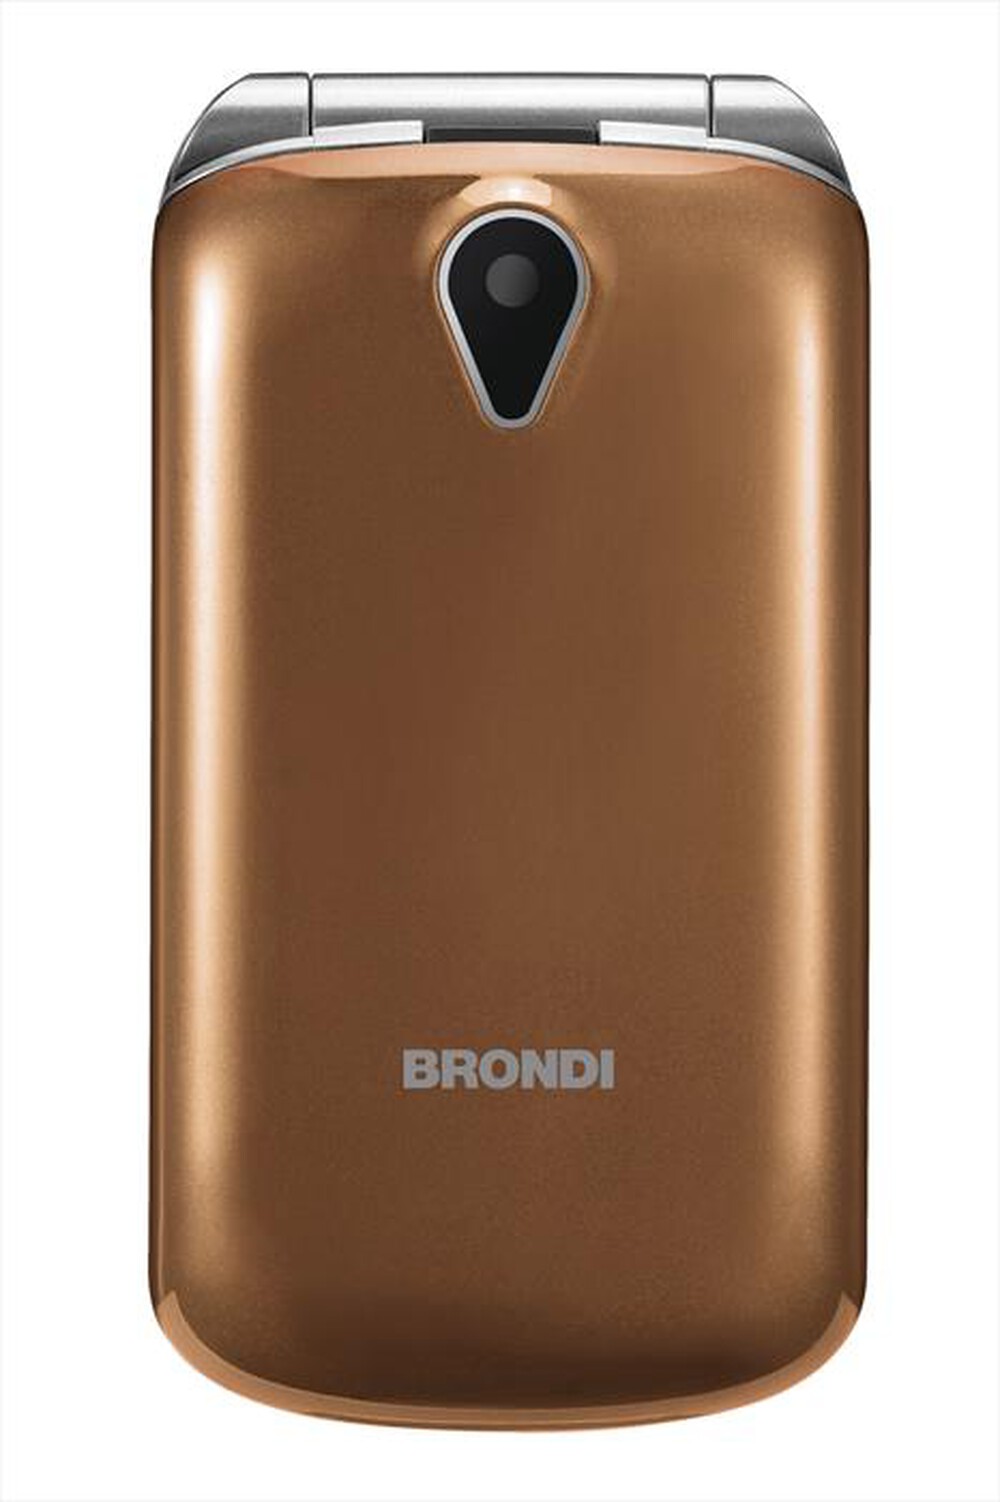 "BRONDI - Cellulare AMICO MIO 4G-BRONZE METAL"